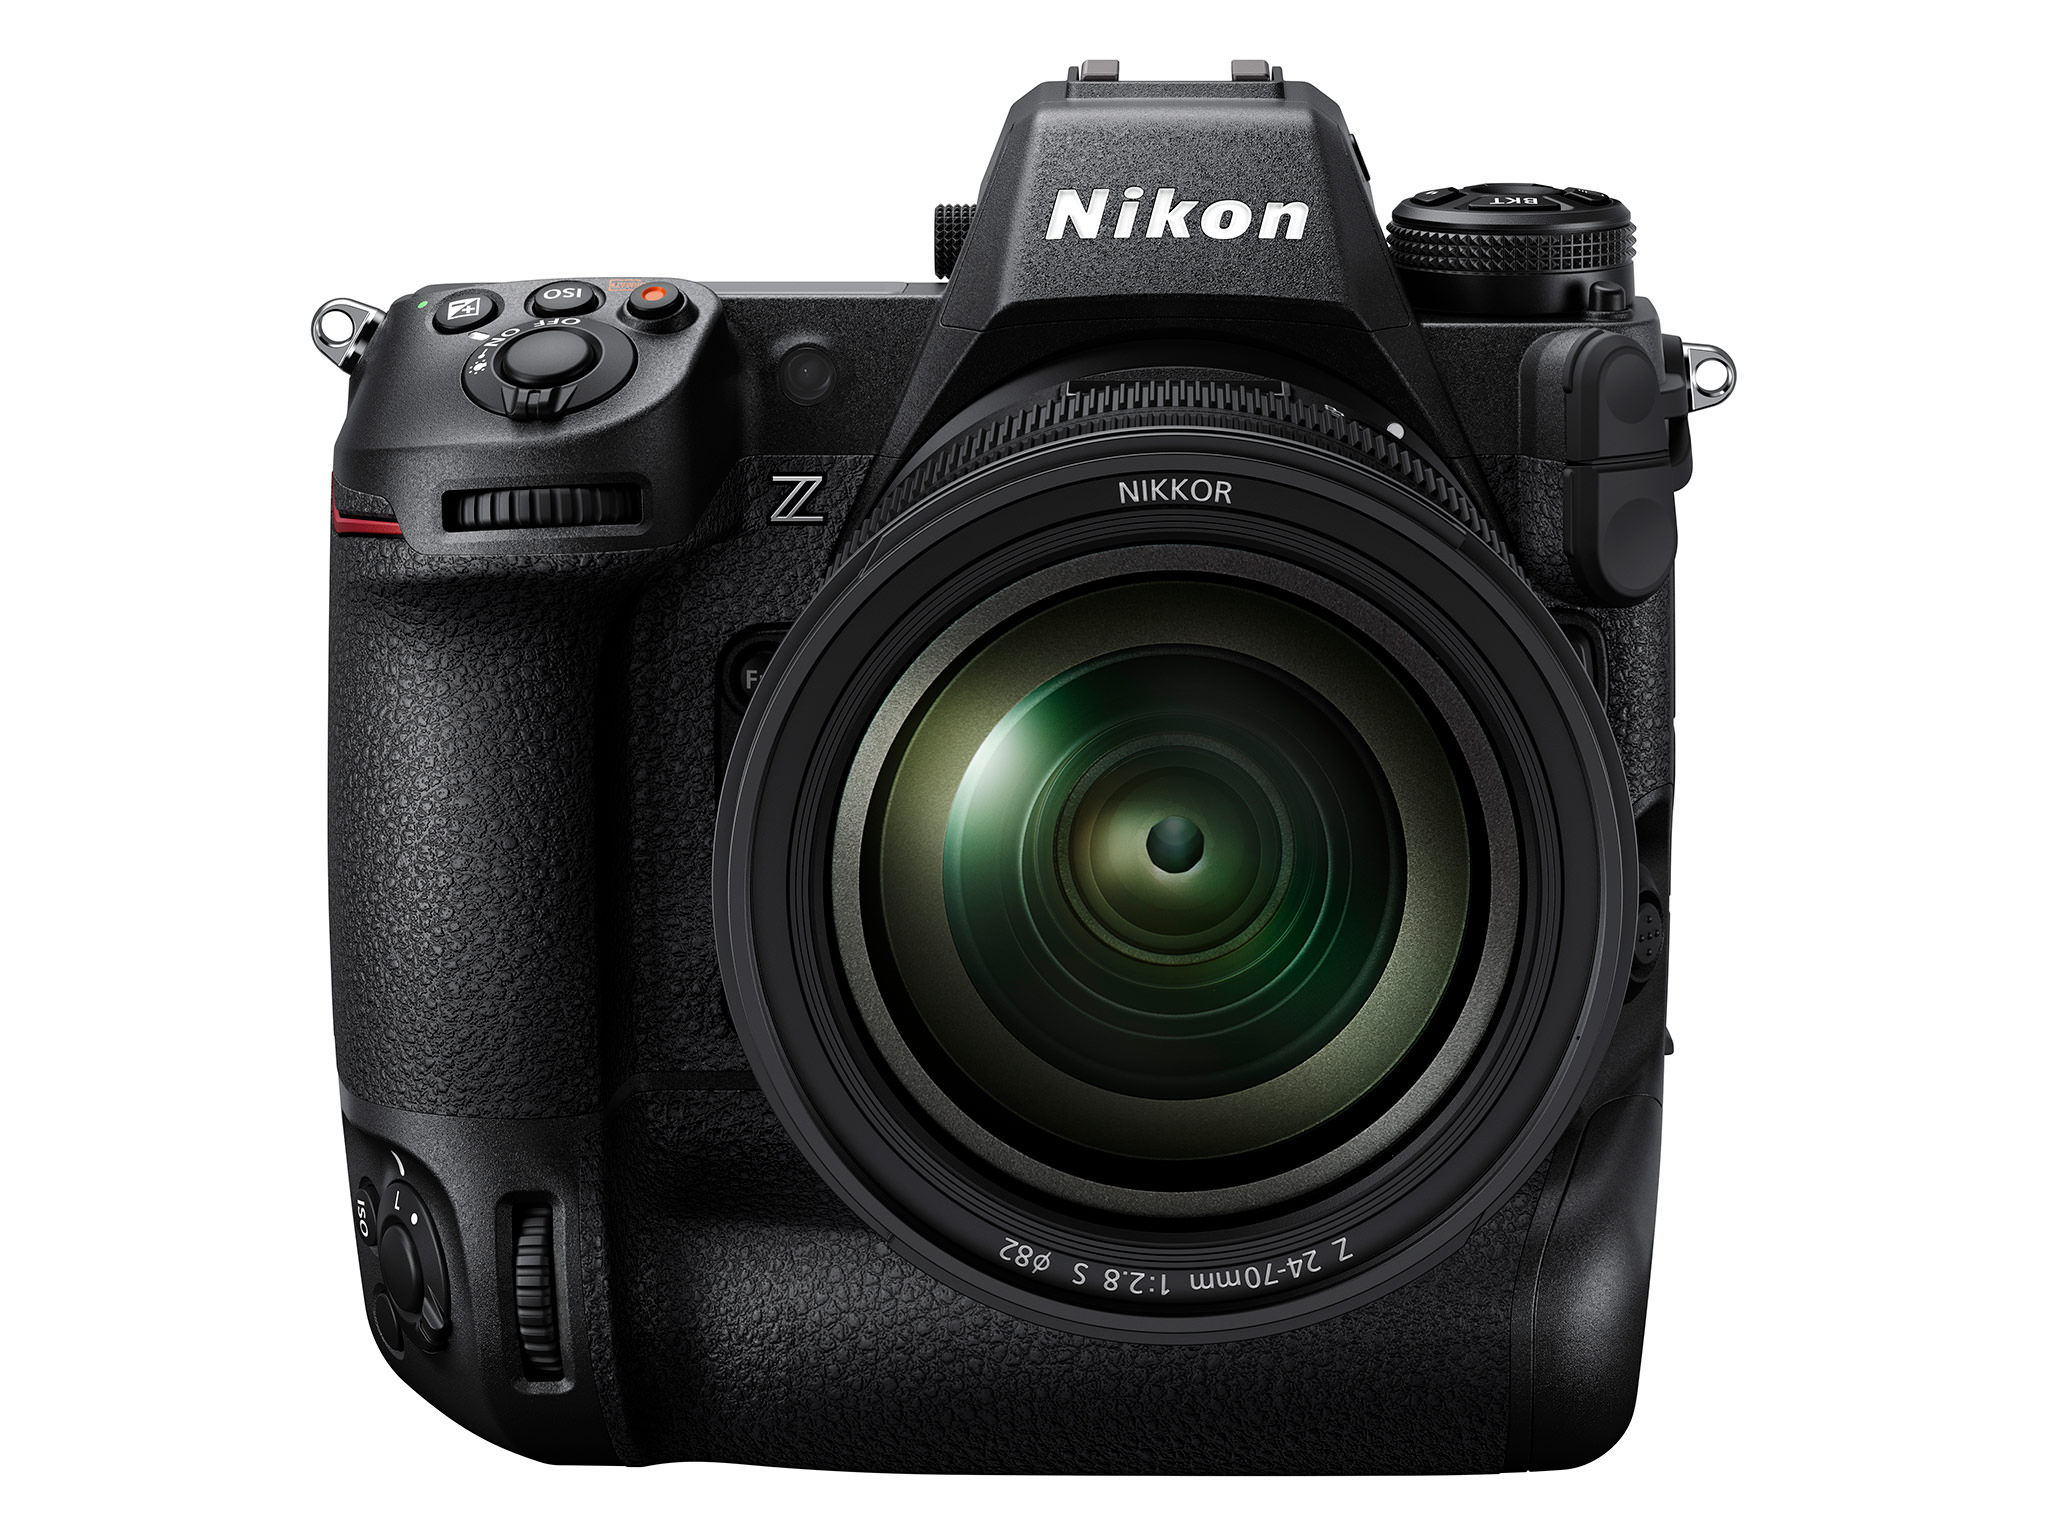 Recommended Nikon Z9 Settings